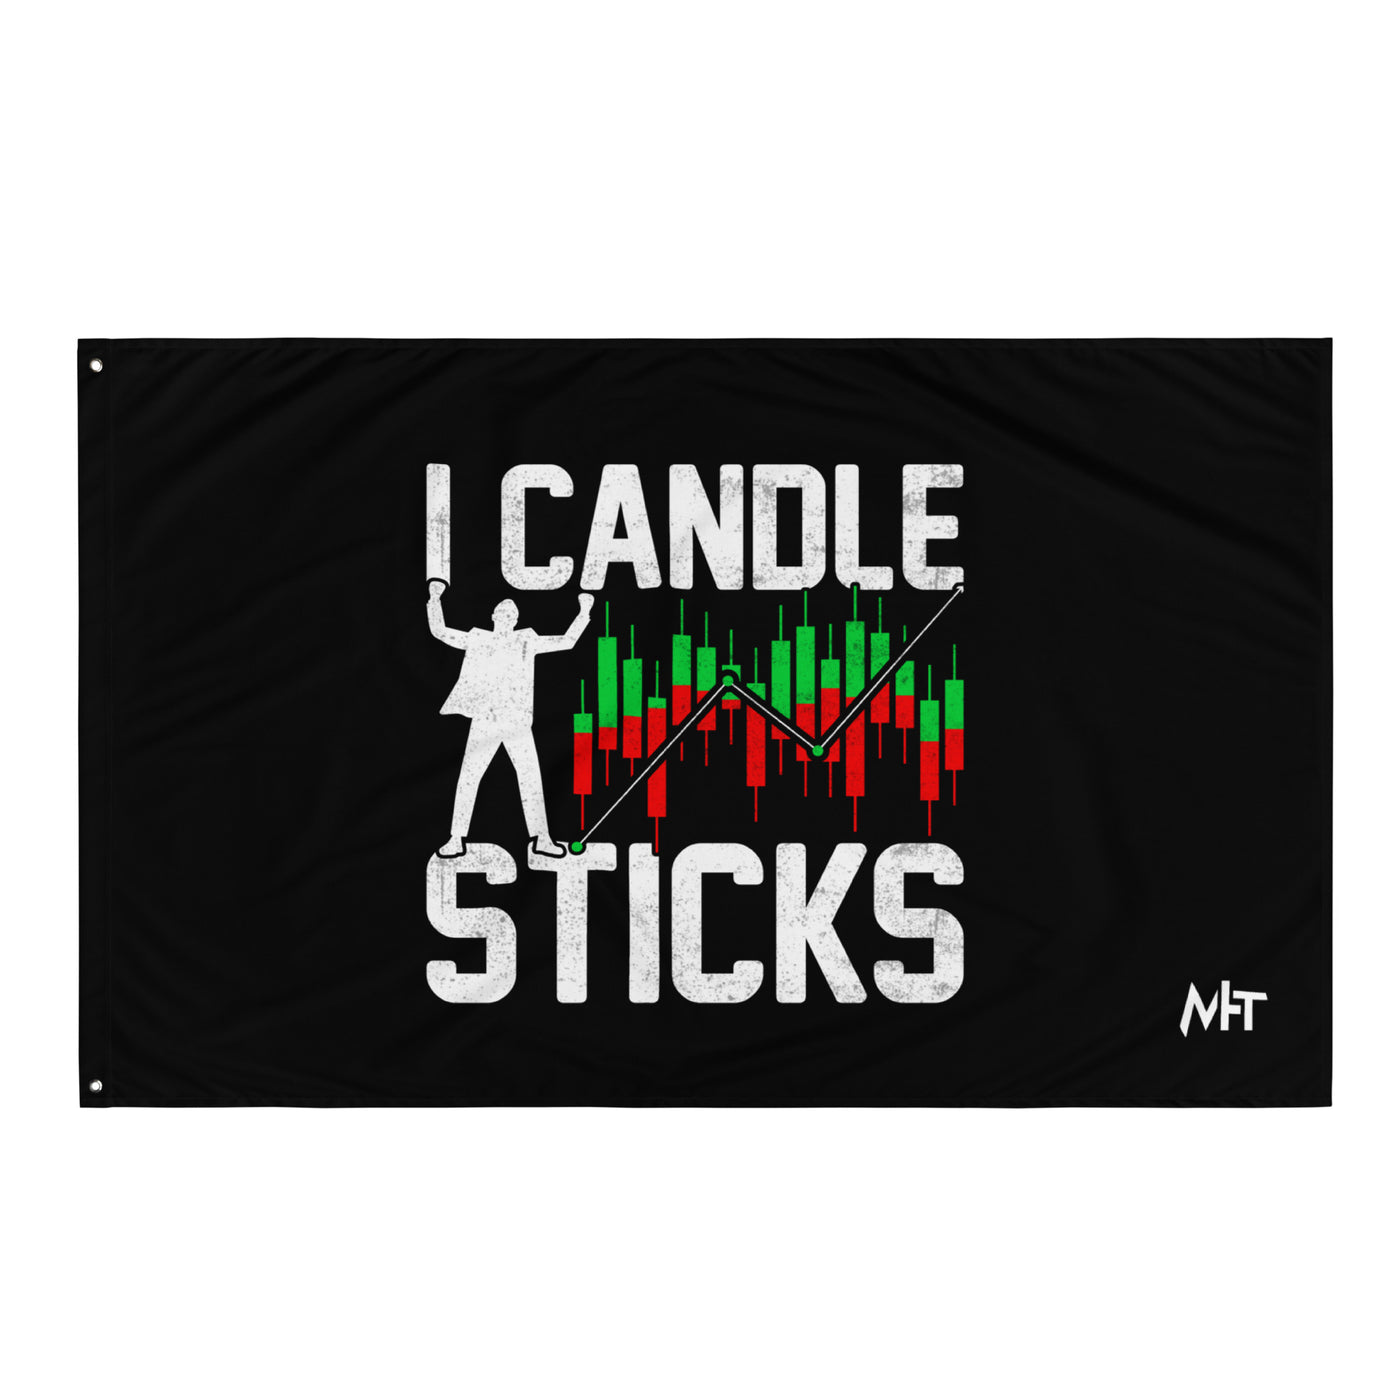 I Candle Stick - Flag